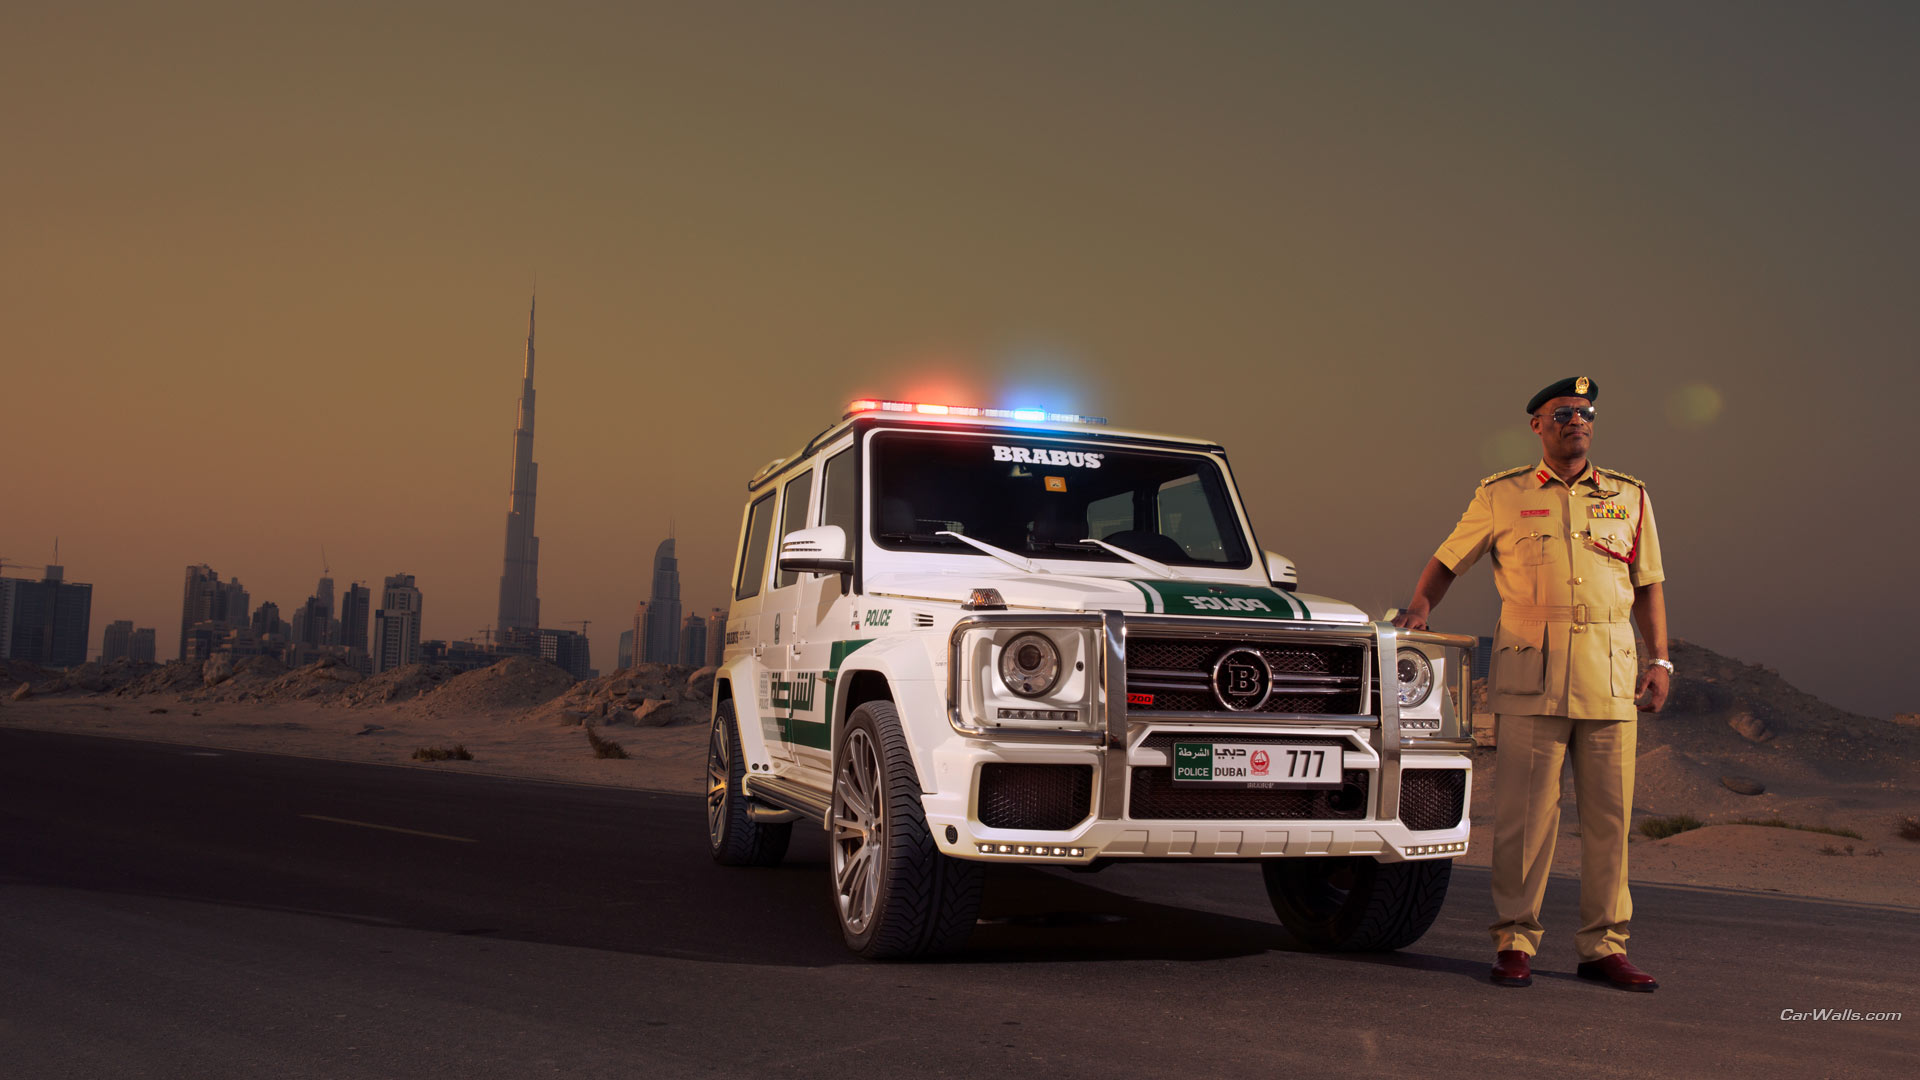 Vehicles 2013 Brabus B63S 700 Widestar Dubai Police Edition HD Wallpaper | Background Image